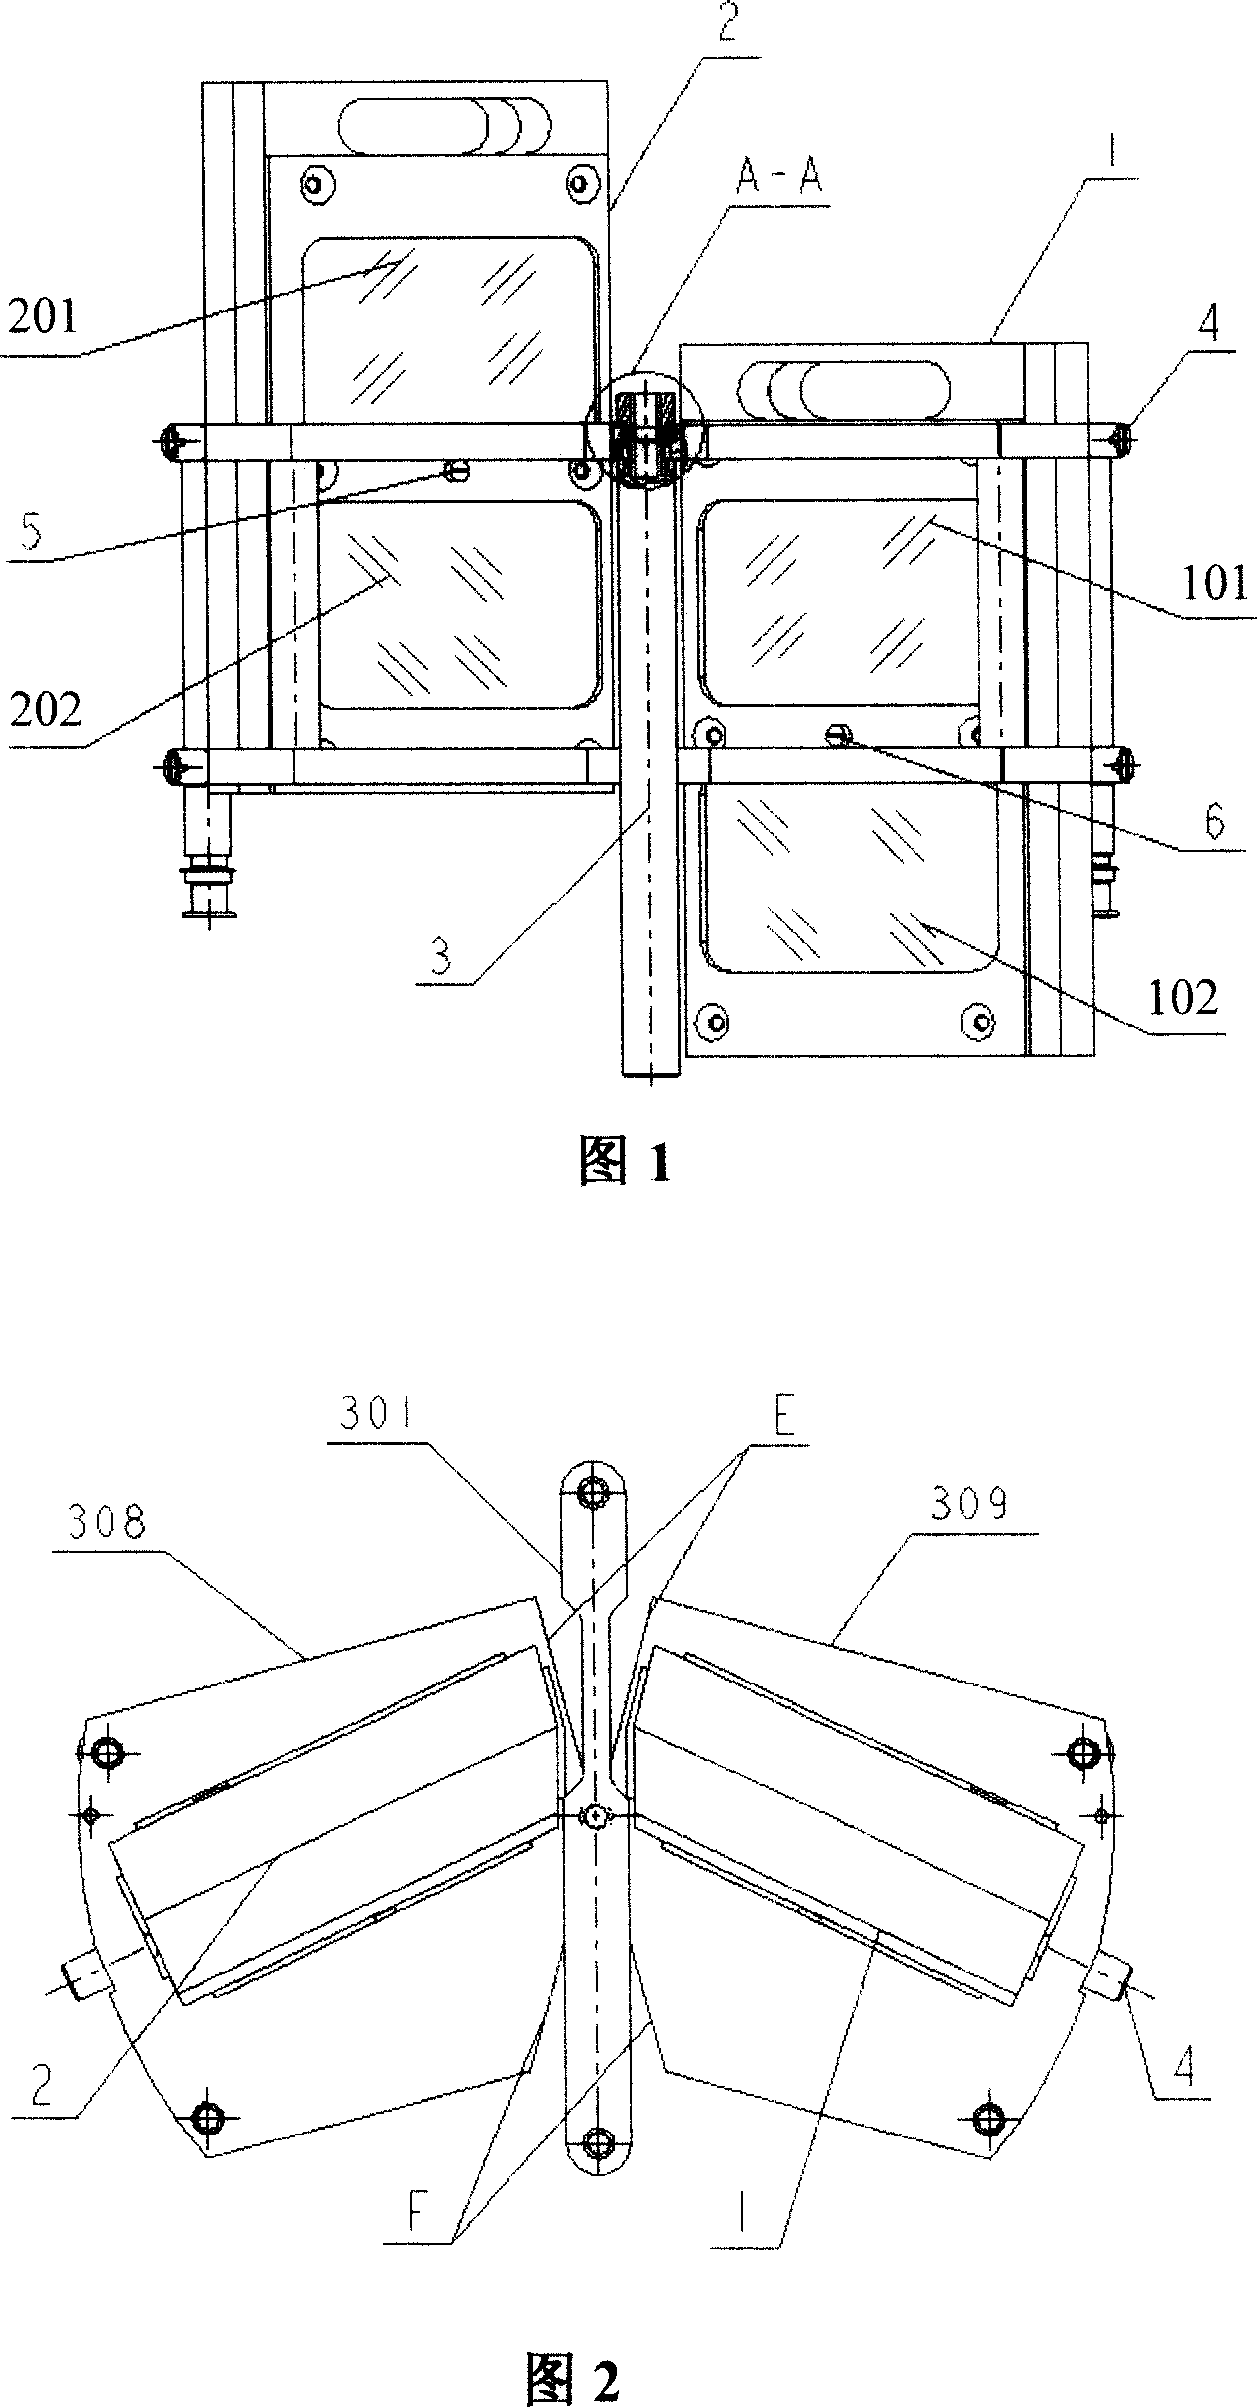 Double optic flat plate swing mechanism